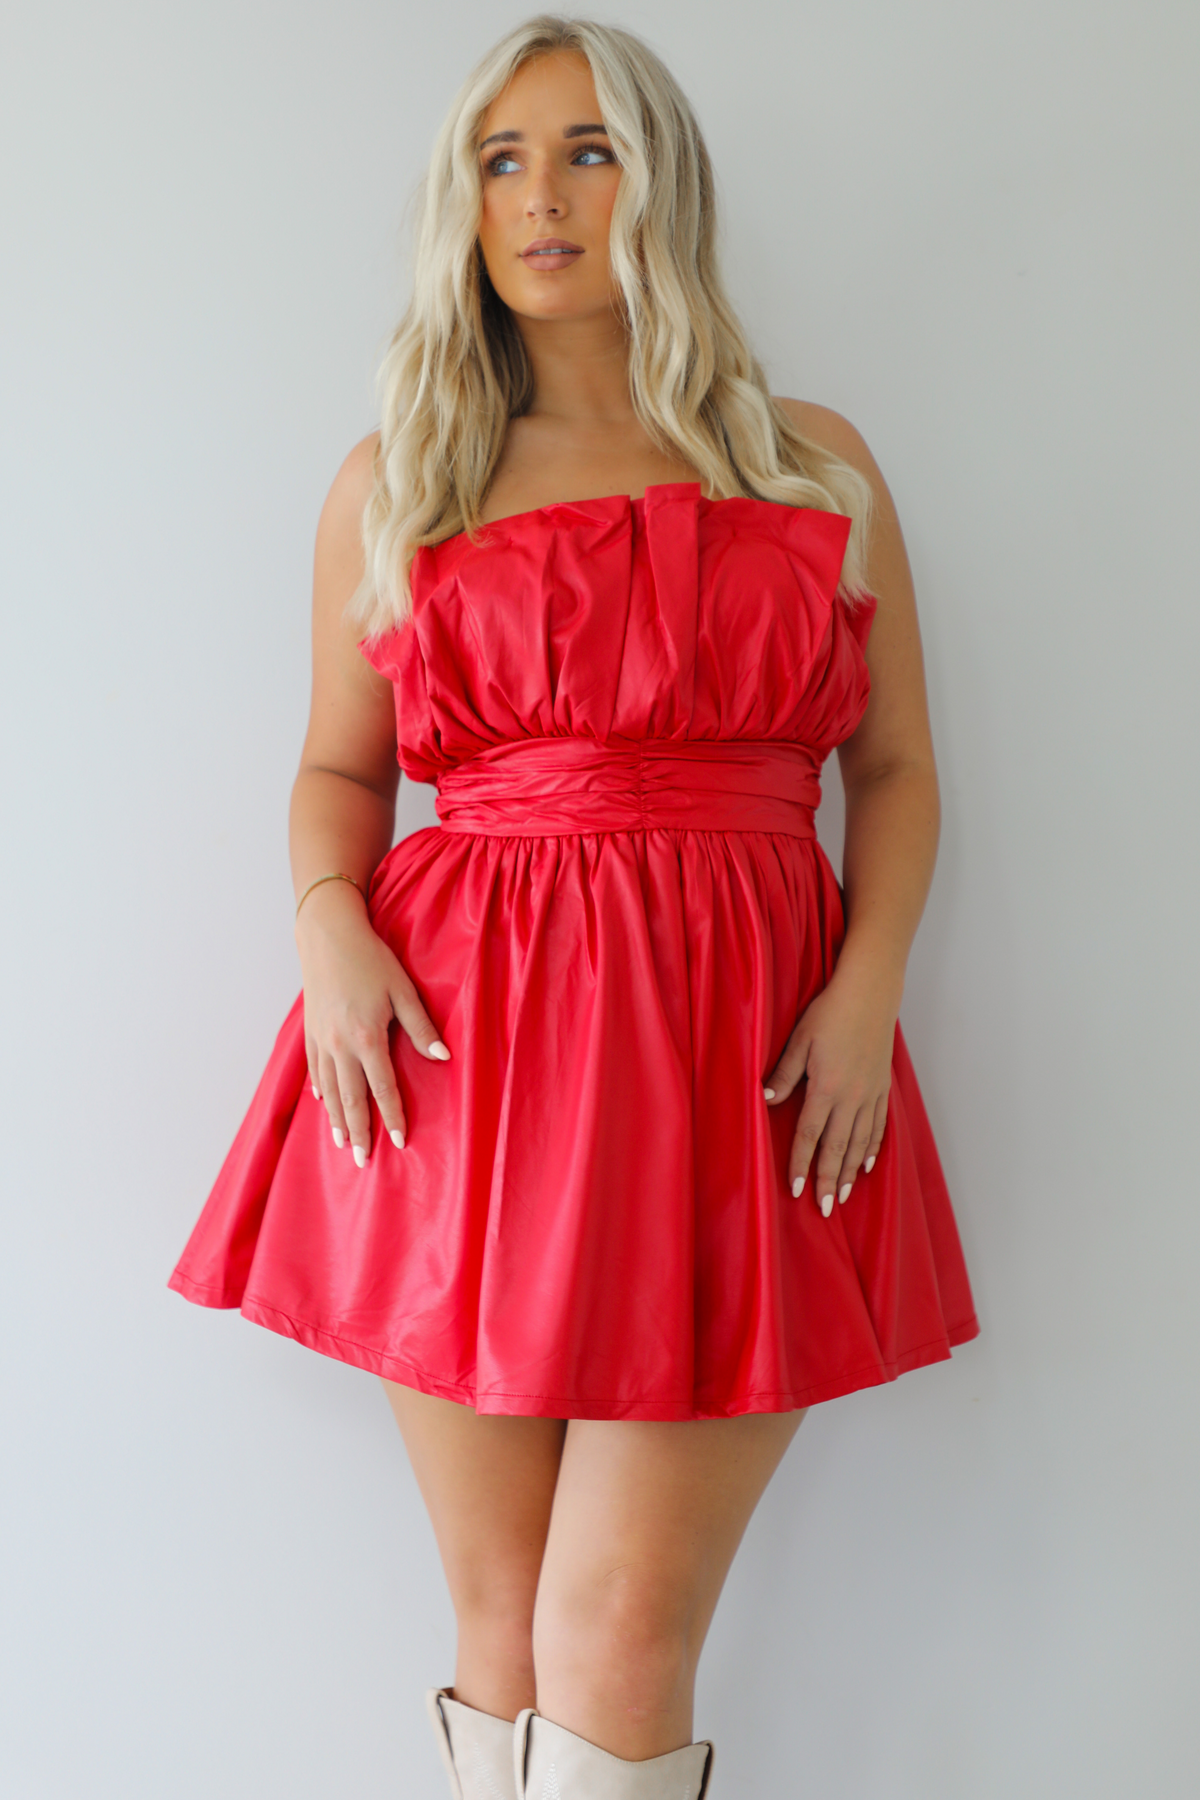 Romantic Mini Dress: Red